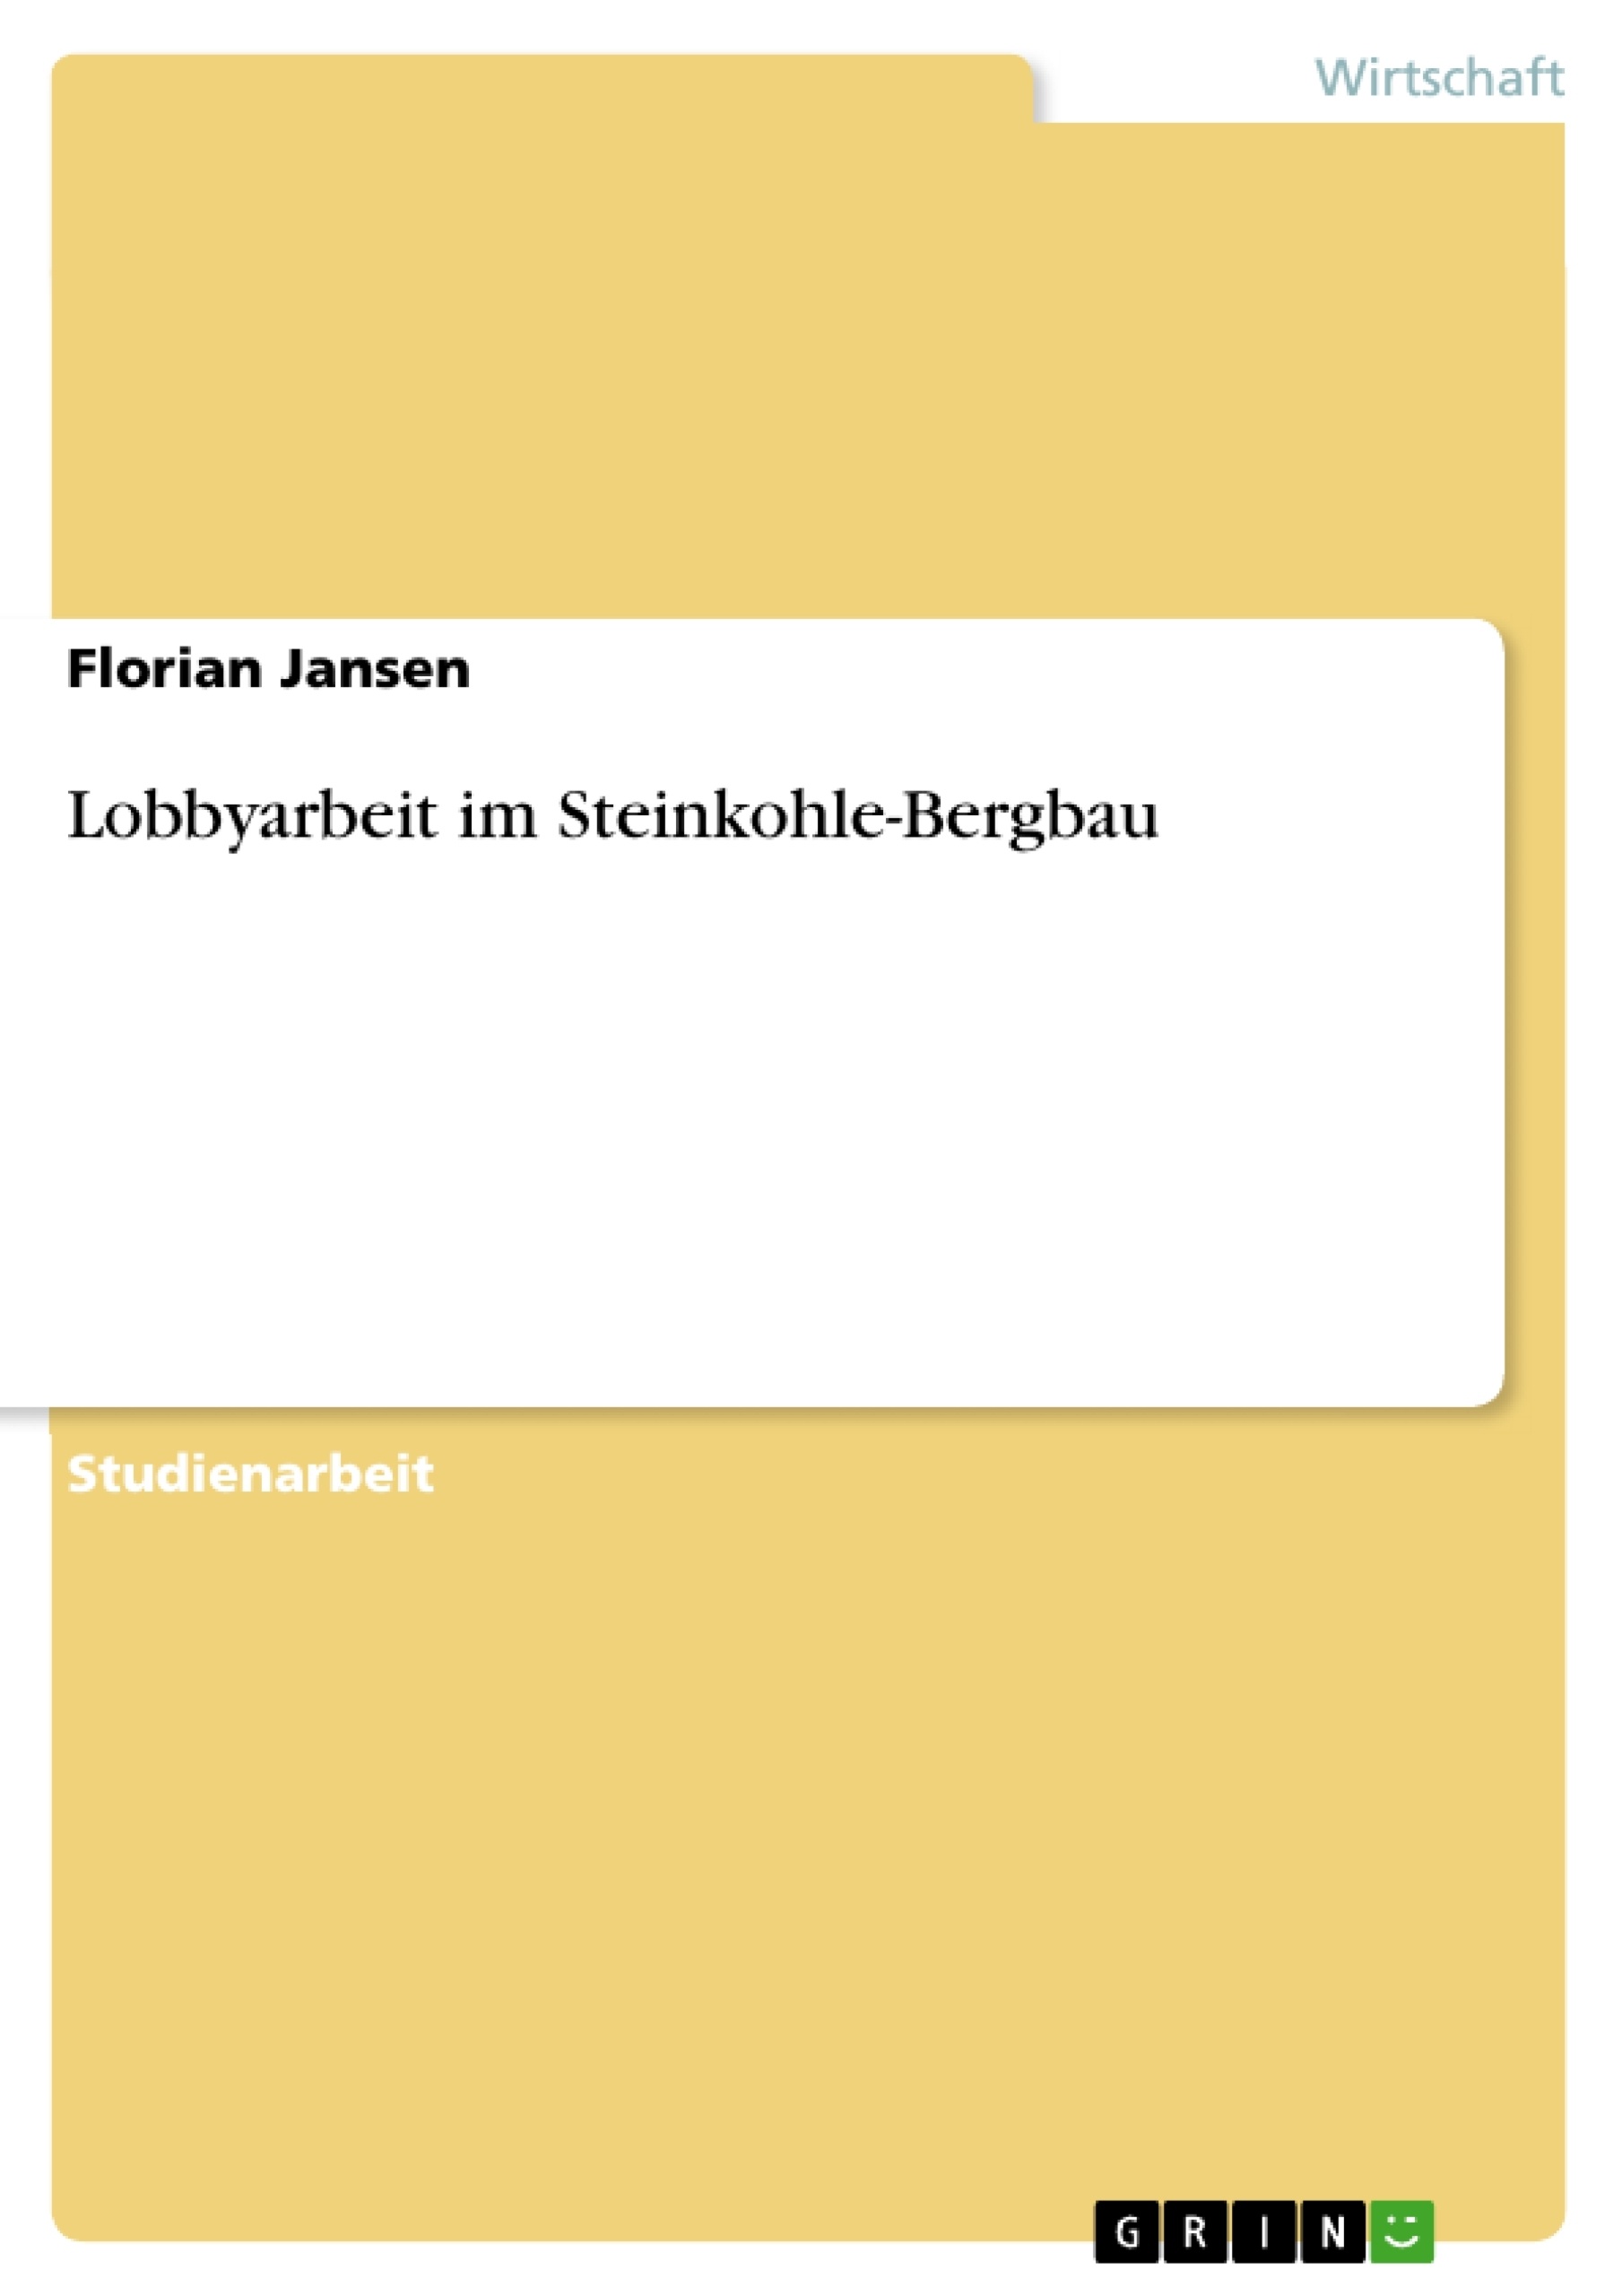 Título: Lobbyarbeit im Steinkohle-Bergbau